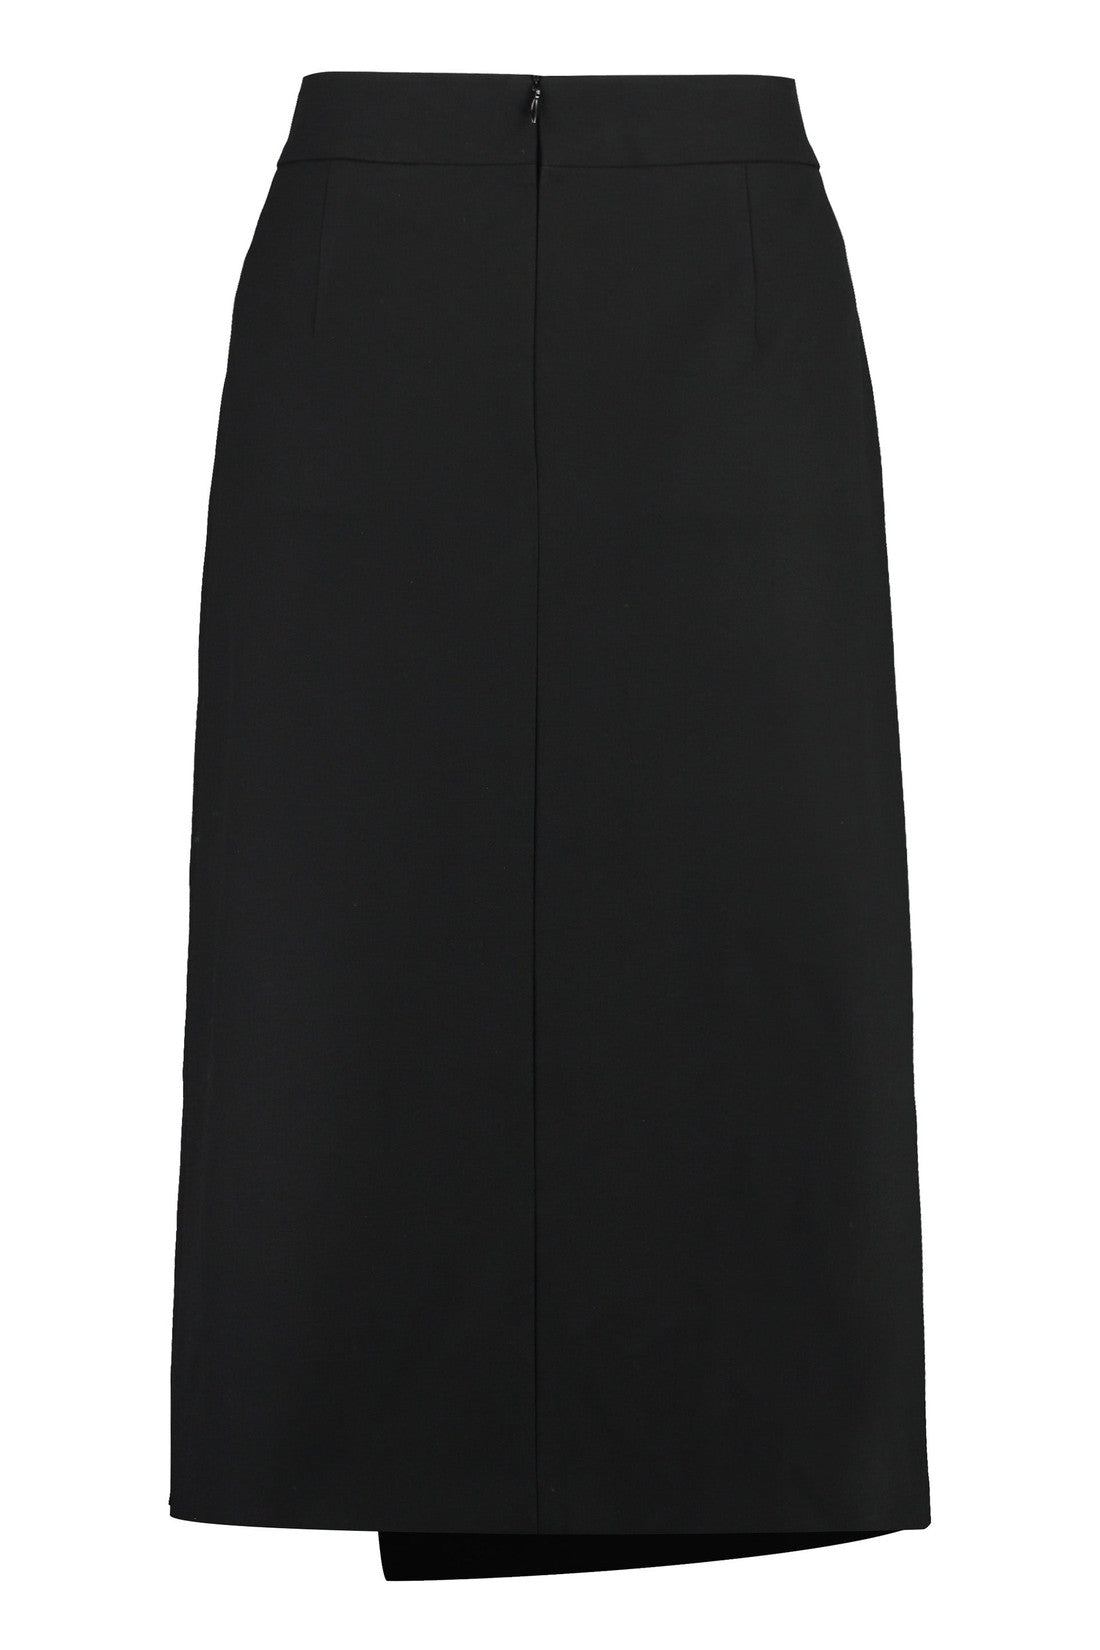 BOSS-OUTLET-SALE-A-line skirt-ARCHIVIST